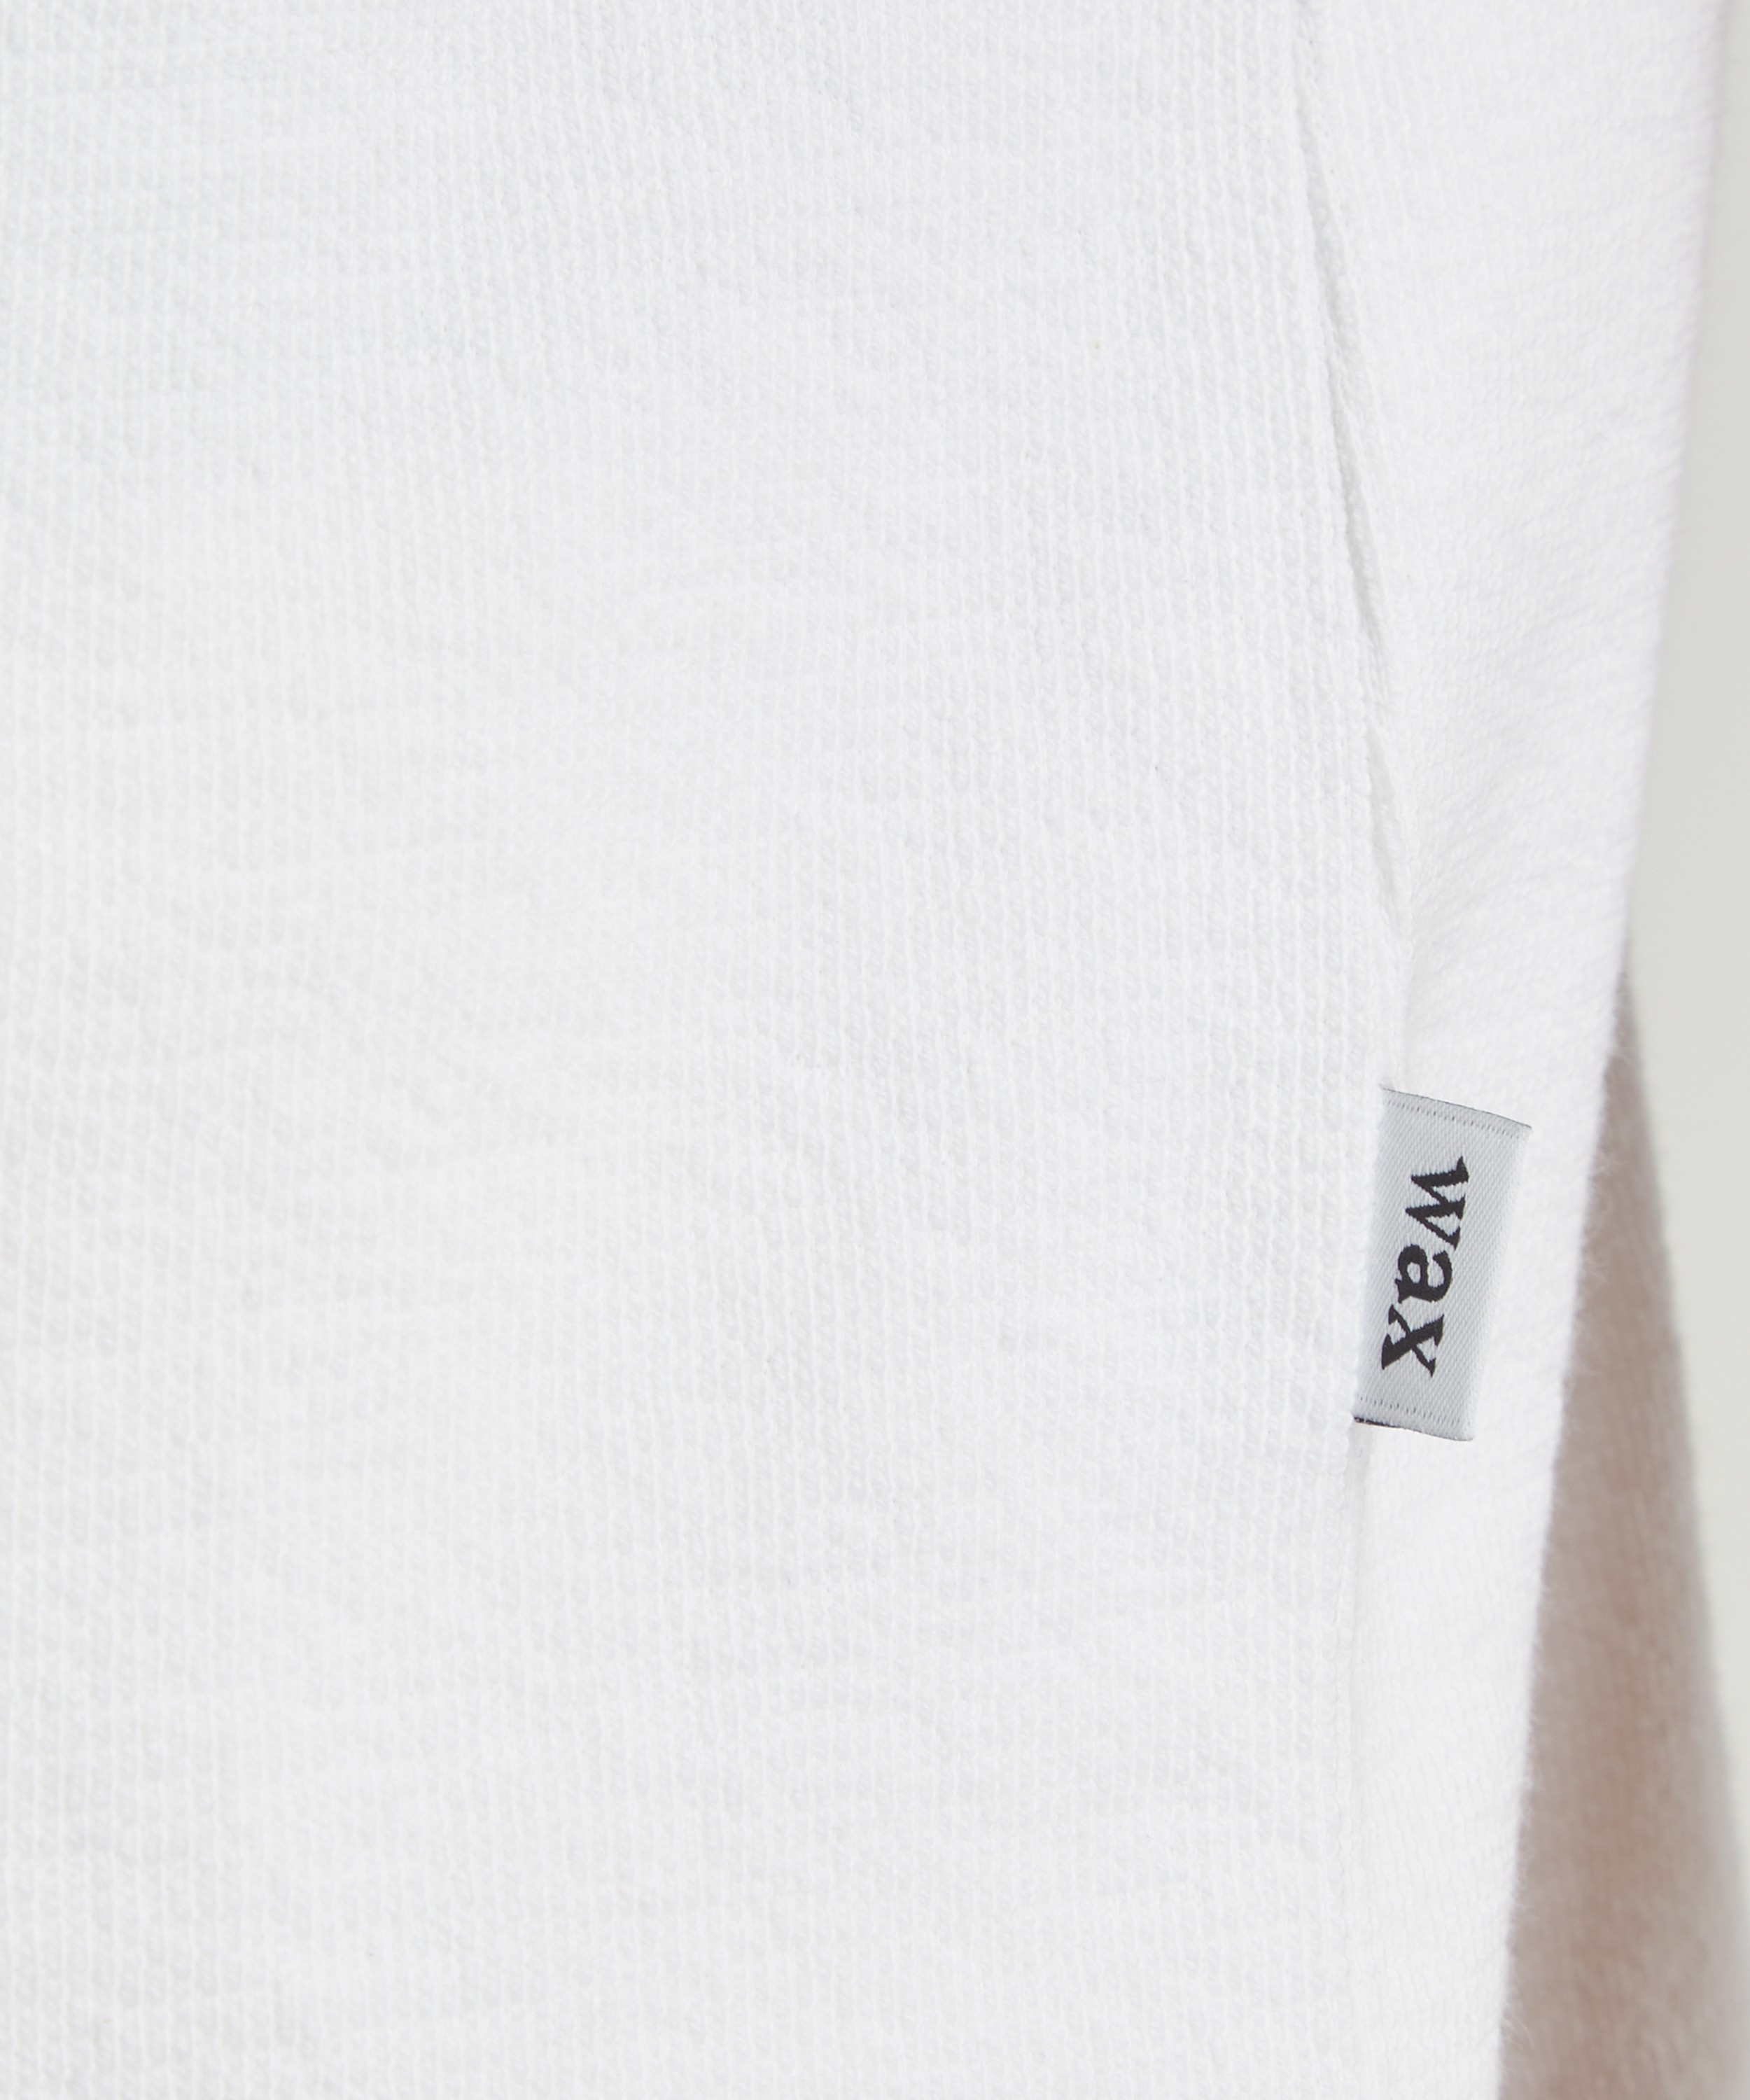 Wax London - Dean Textured Jolt White T-Shirt image number 4